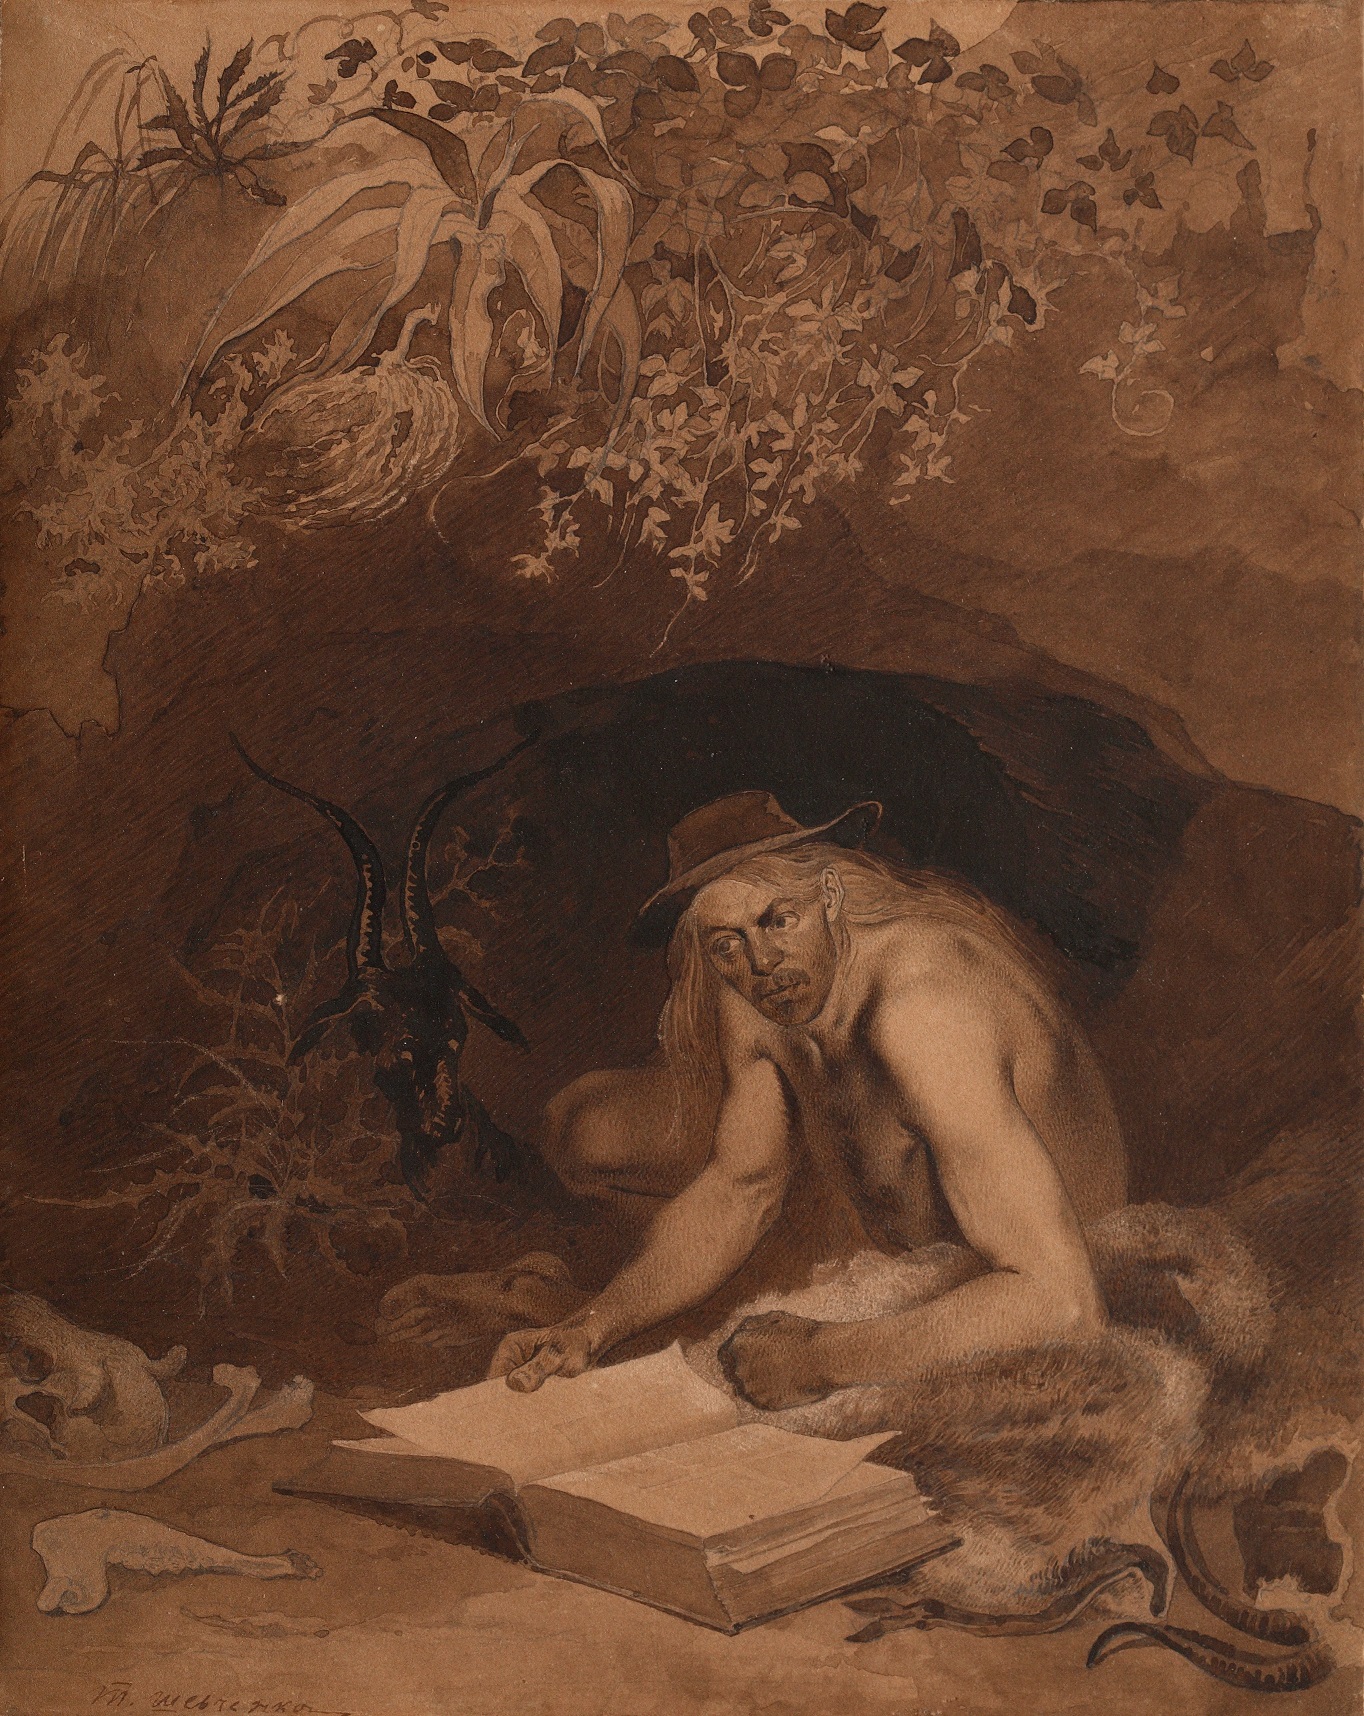 Robinson Crusoe, 1856, sepia, bistre